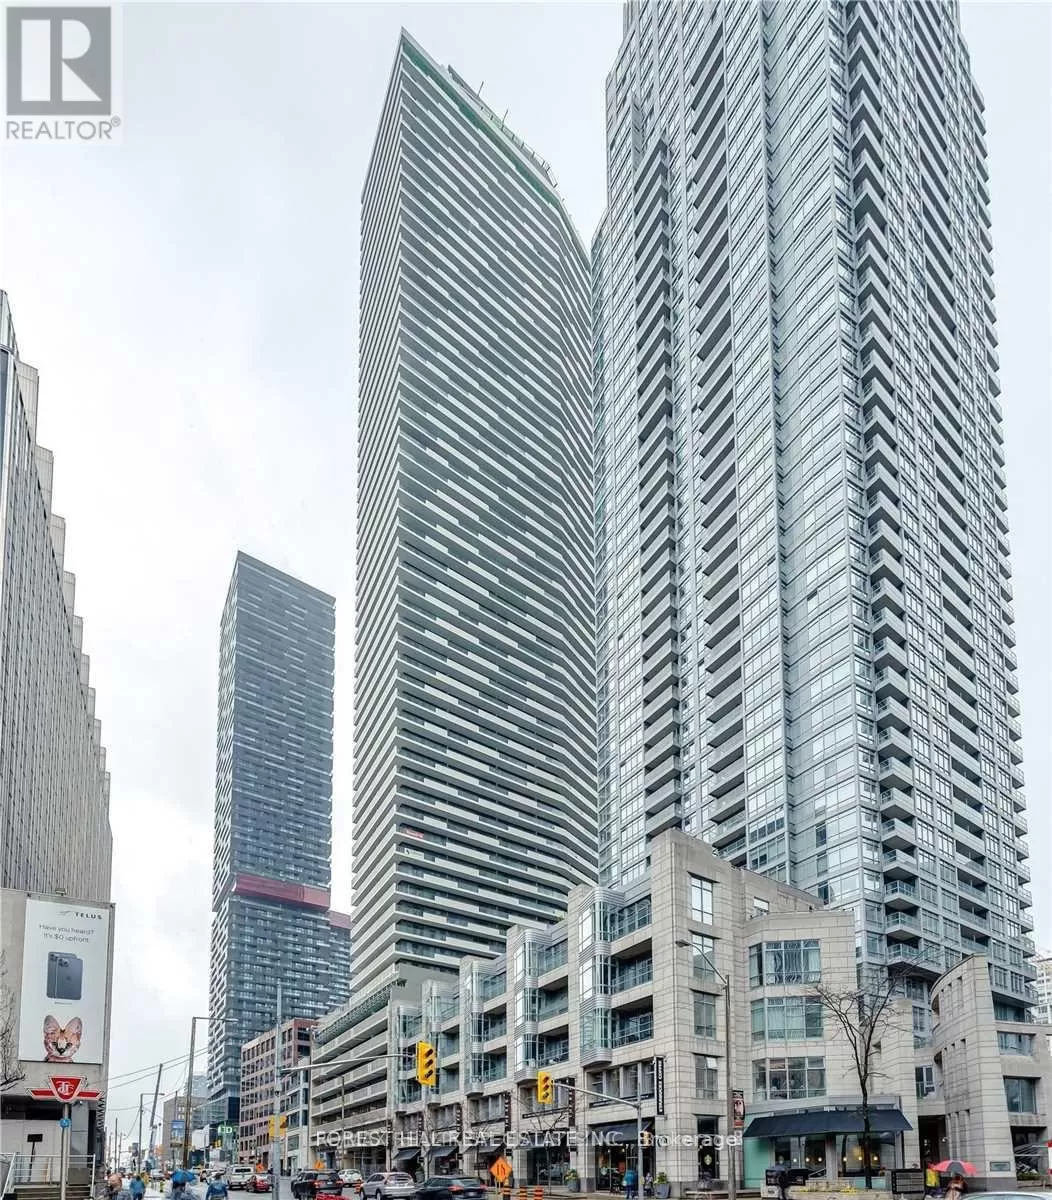 Apartment for rent: 805 - 2221 Yonge Street, Toronto, Ontario M4S 2B4